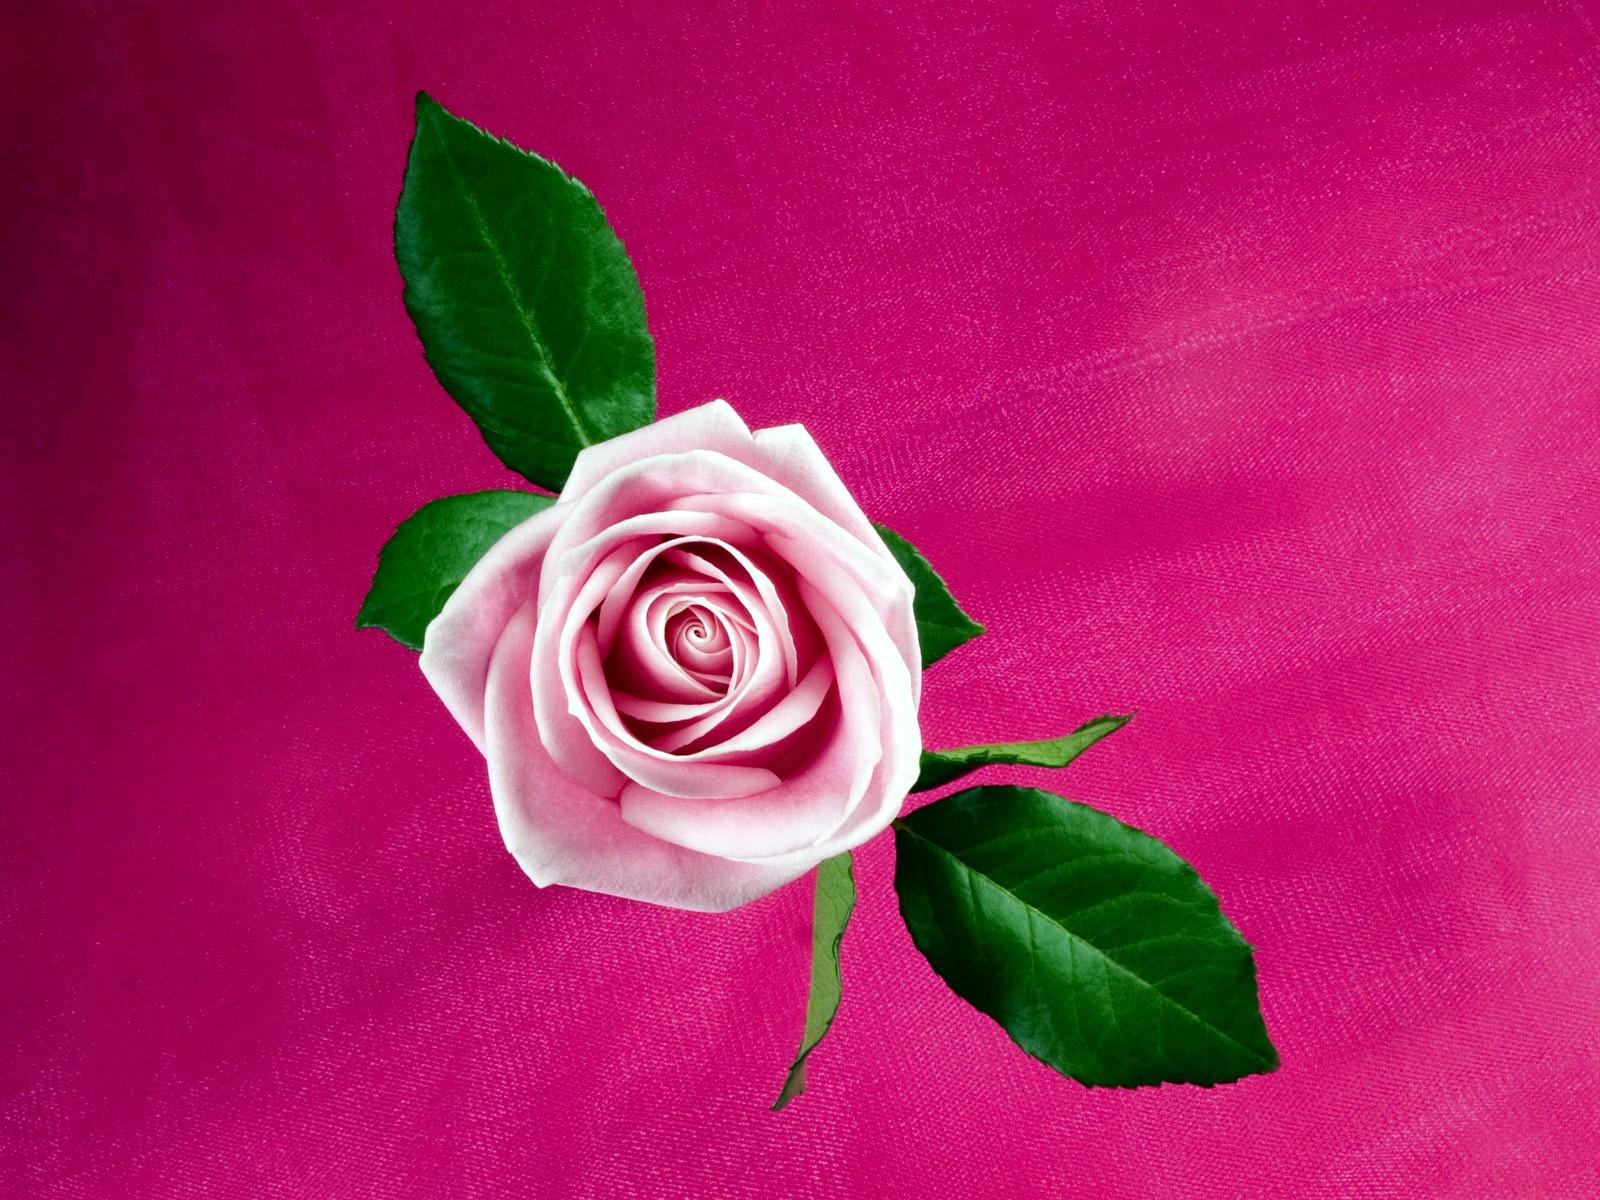 Cool Pink Rose Wallpaper in jpg format for free download